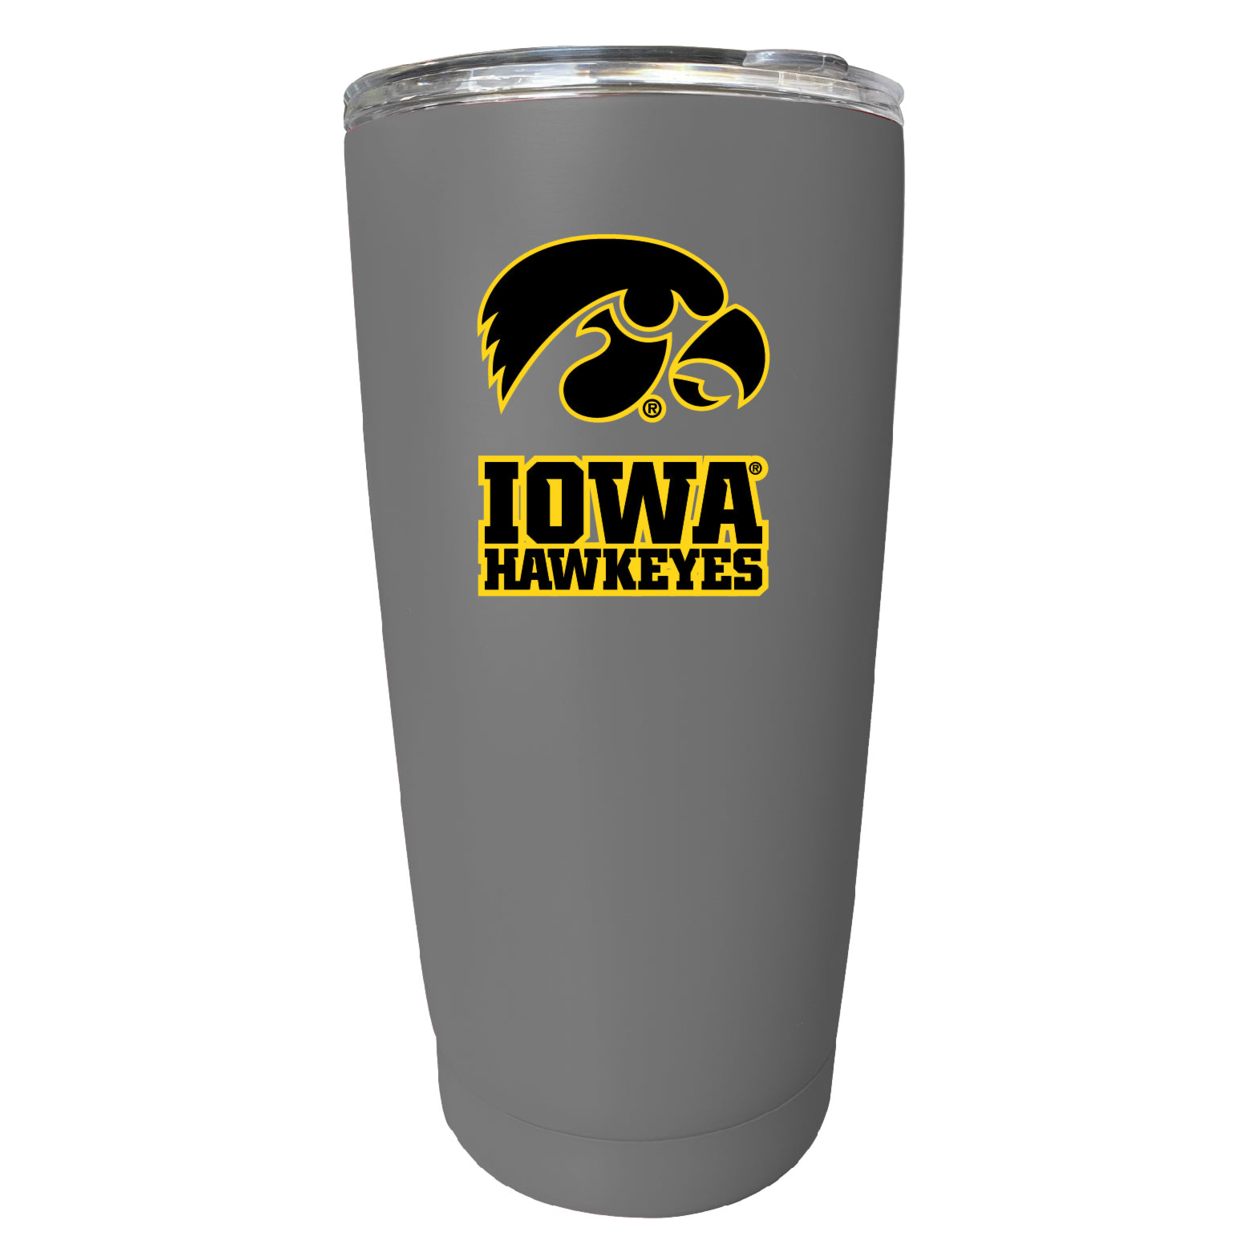 Iowa Hawkeyes 16 Oz Stainless Steel Insulated Tumbler - Gray